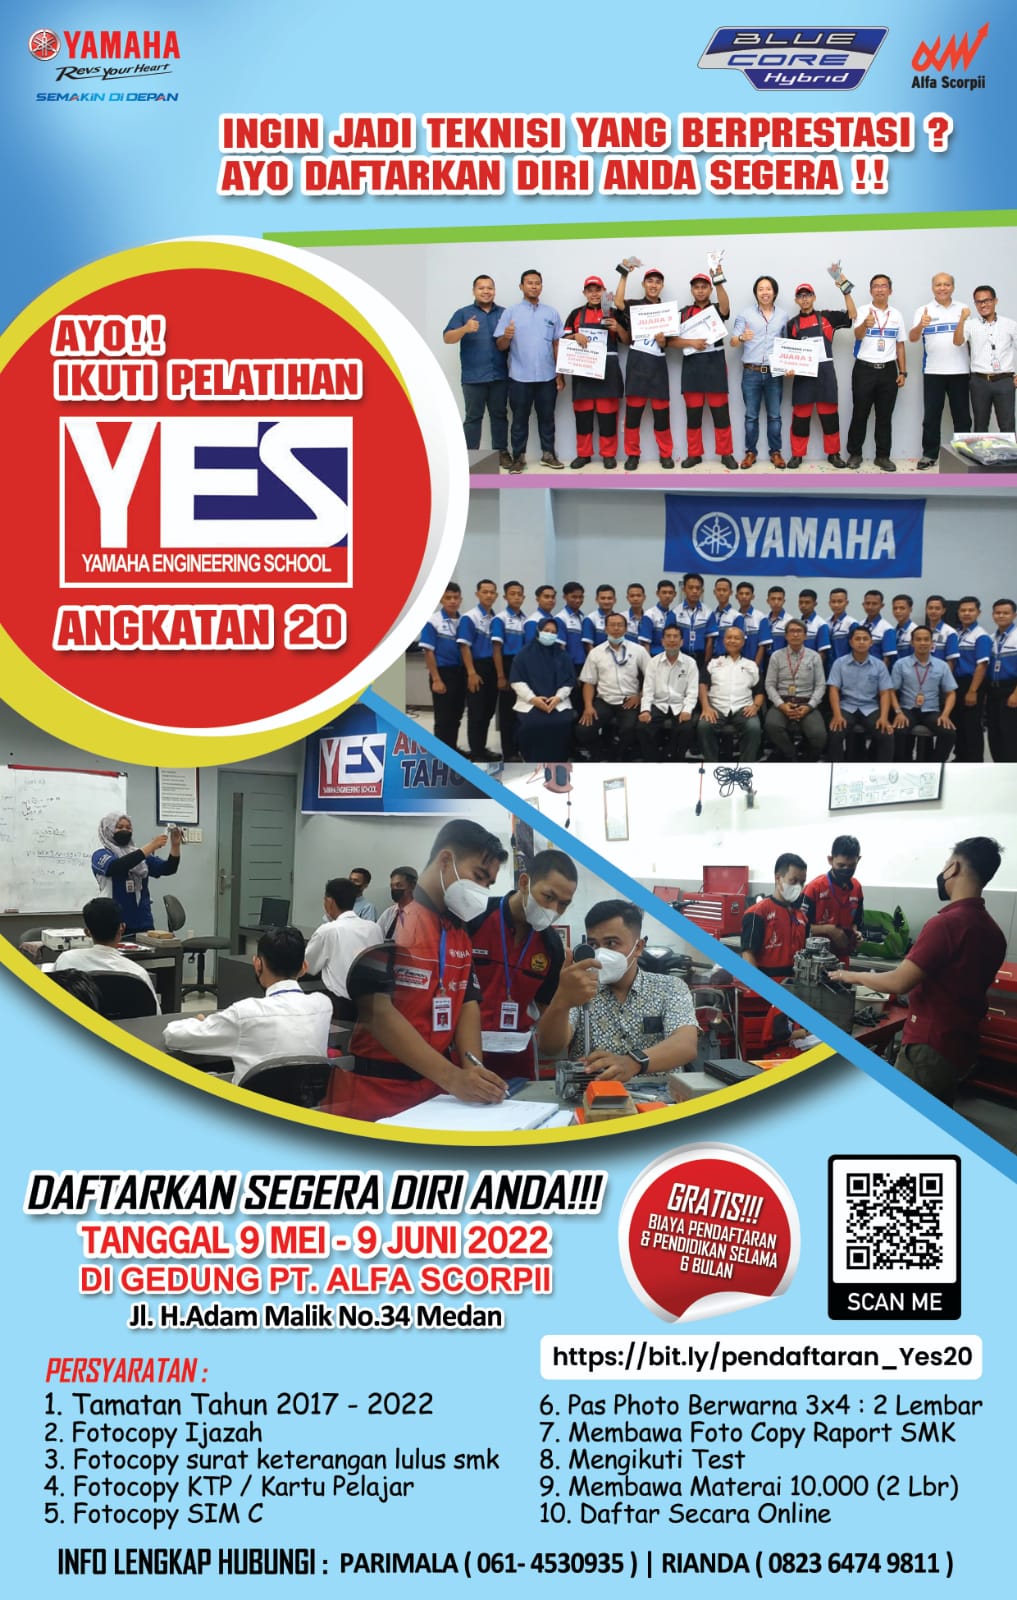 SMK Negeri 2 Tebing Tinggi - Lowongan Kerja Teknisi Yamaha melalui Program YES